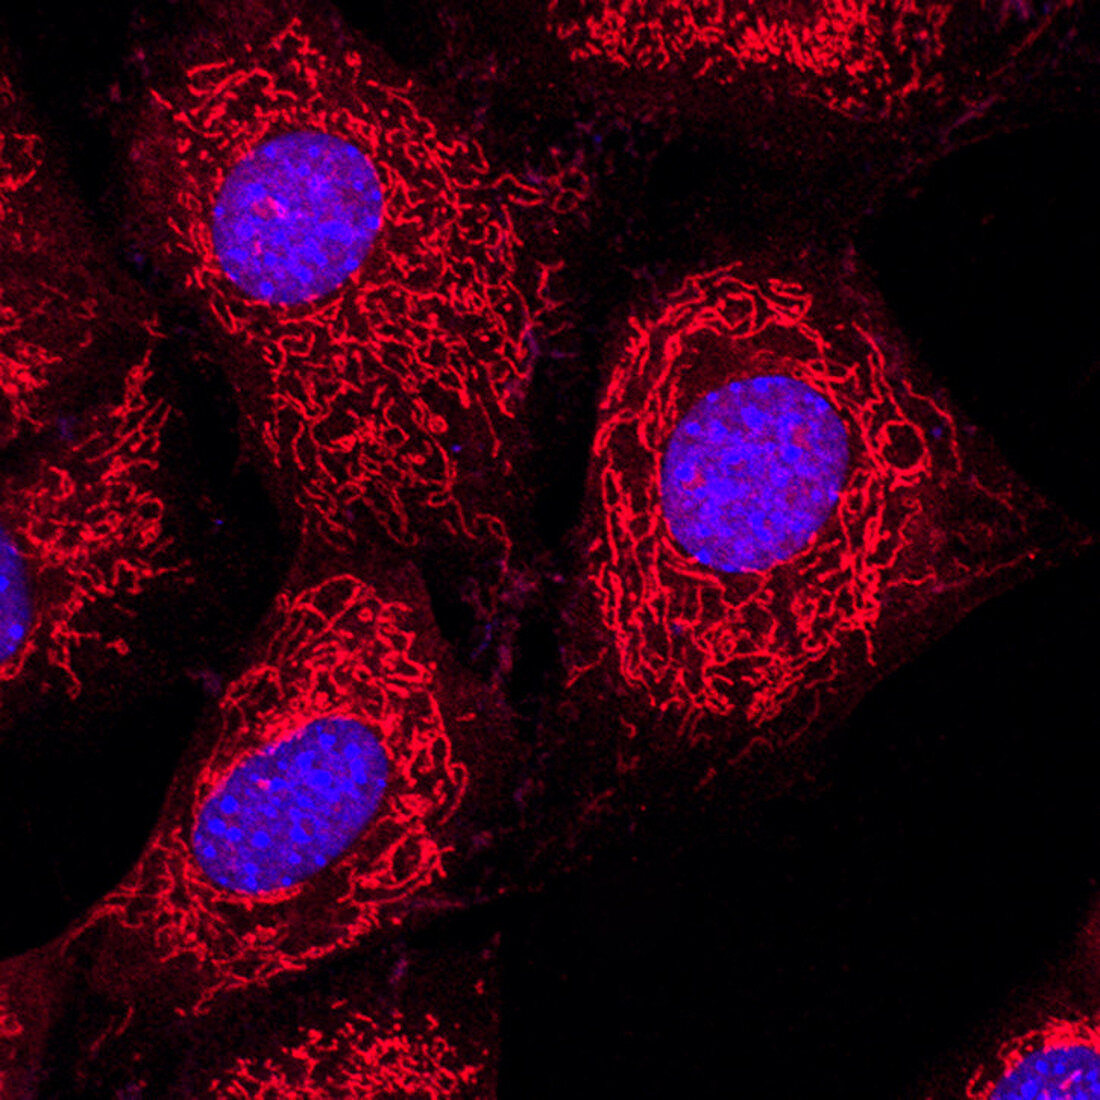 HeLa cells,light micrograph